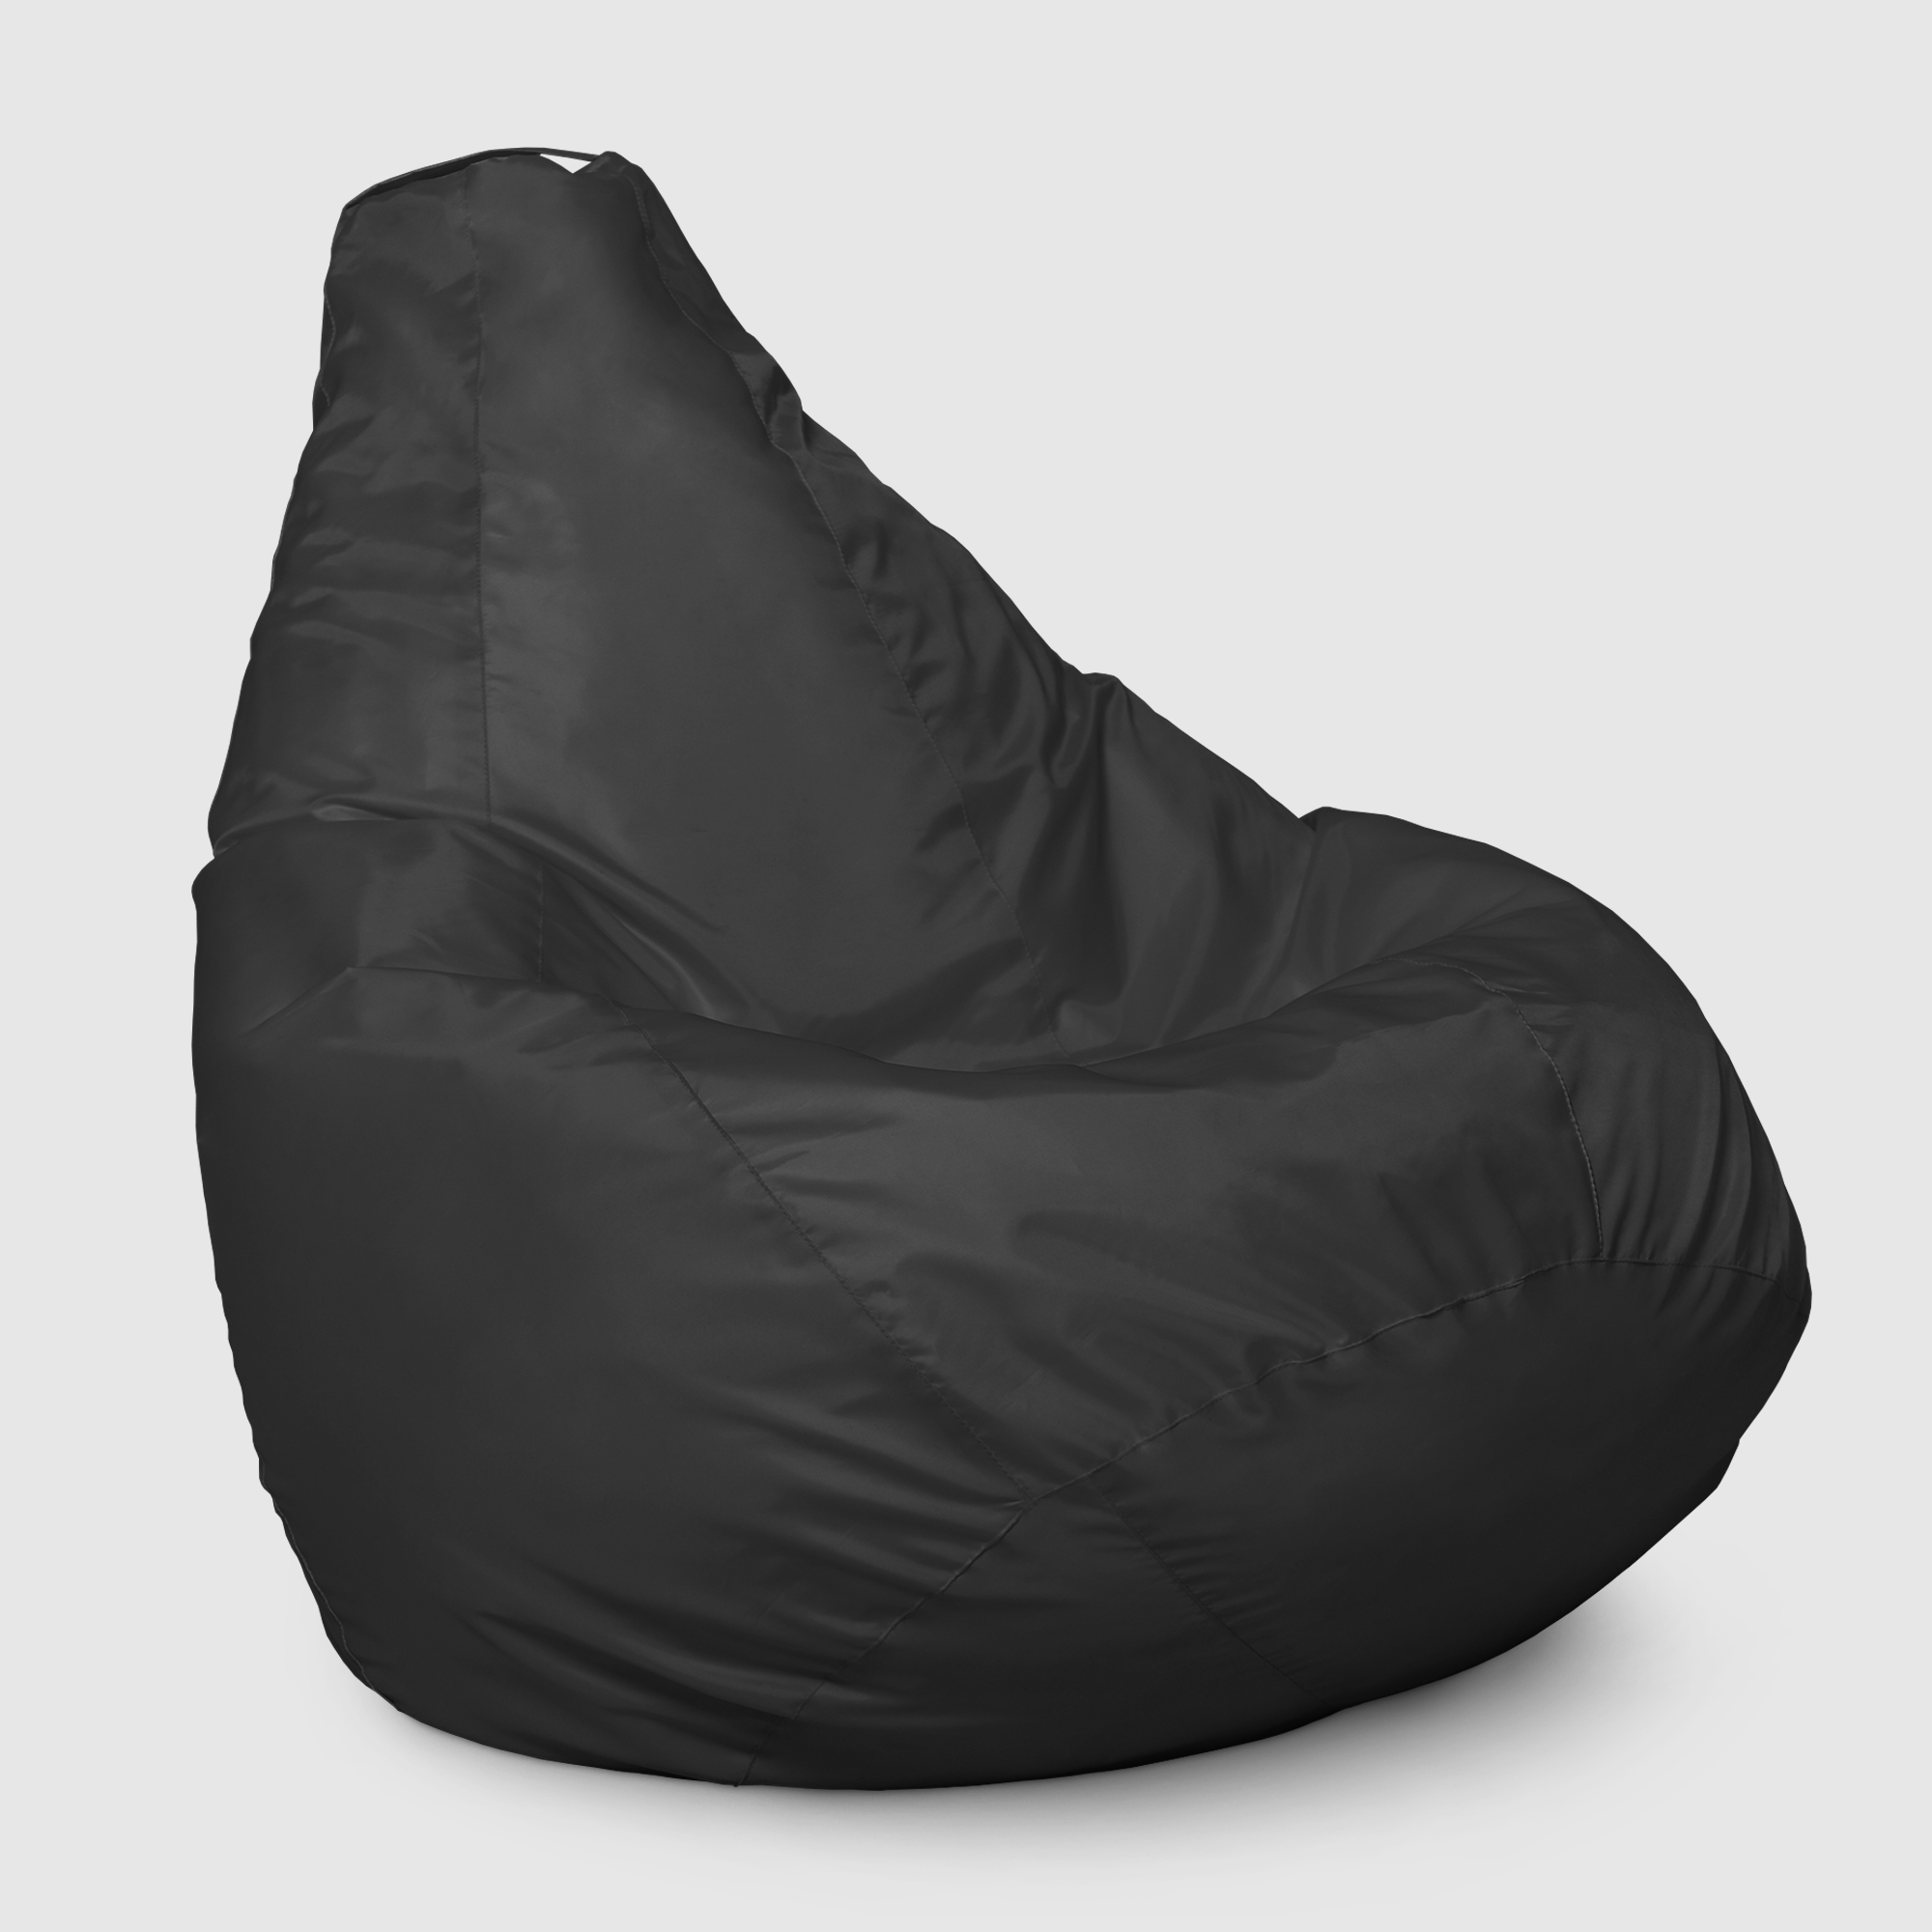 Кресло мешок Dreambag Меган xl черное 85х85х125 см кресло мешок dreambag меган xl черное 85х85х125 см